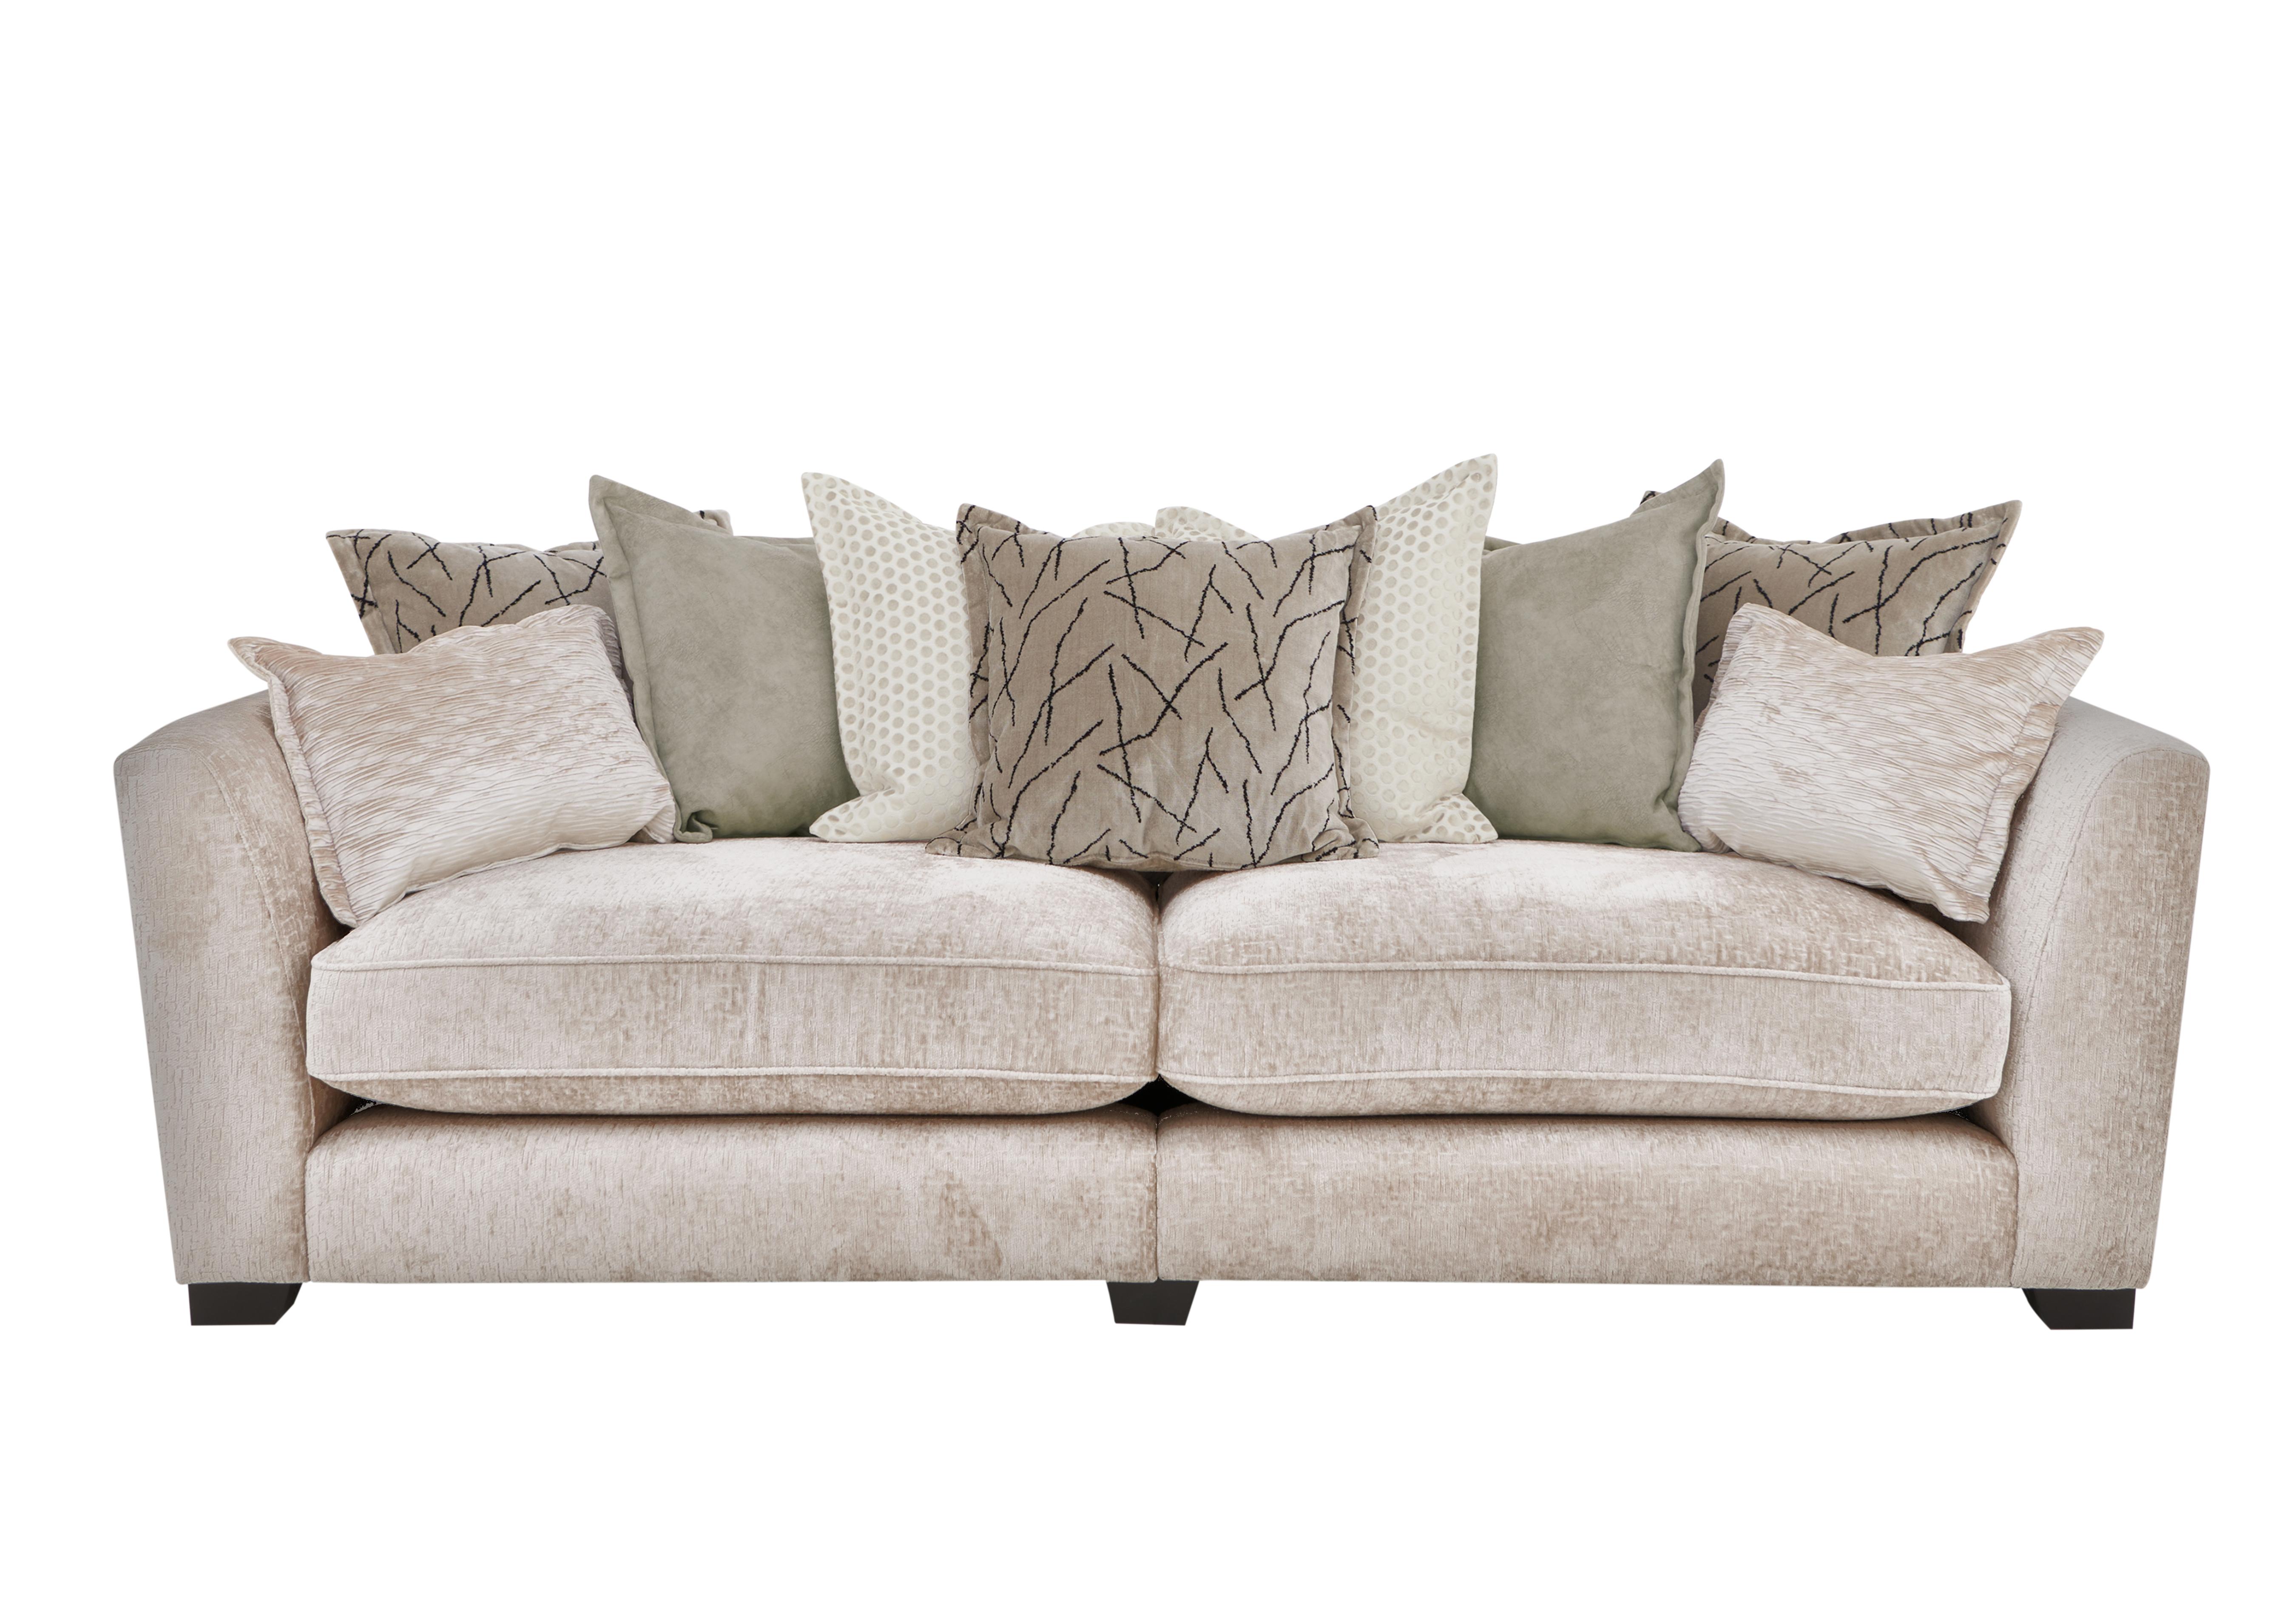 Boutique Lavish Fabric 4 Seater Split Scatter Back Sofa in Alexandra Natural on Furniture Village